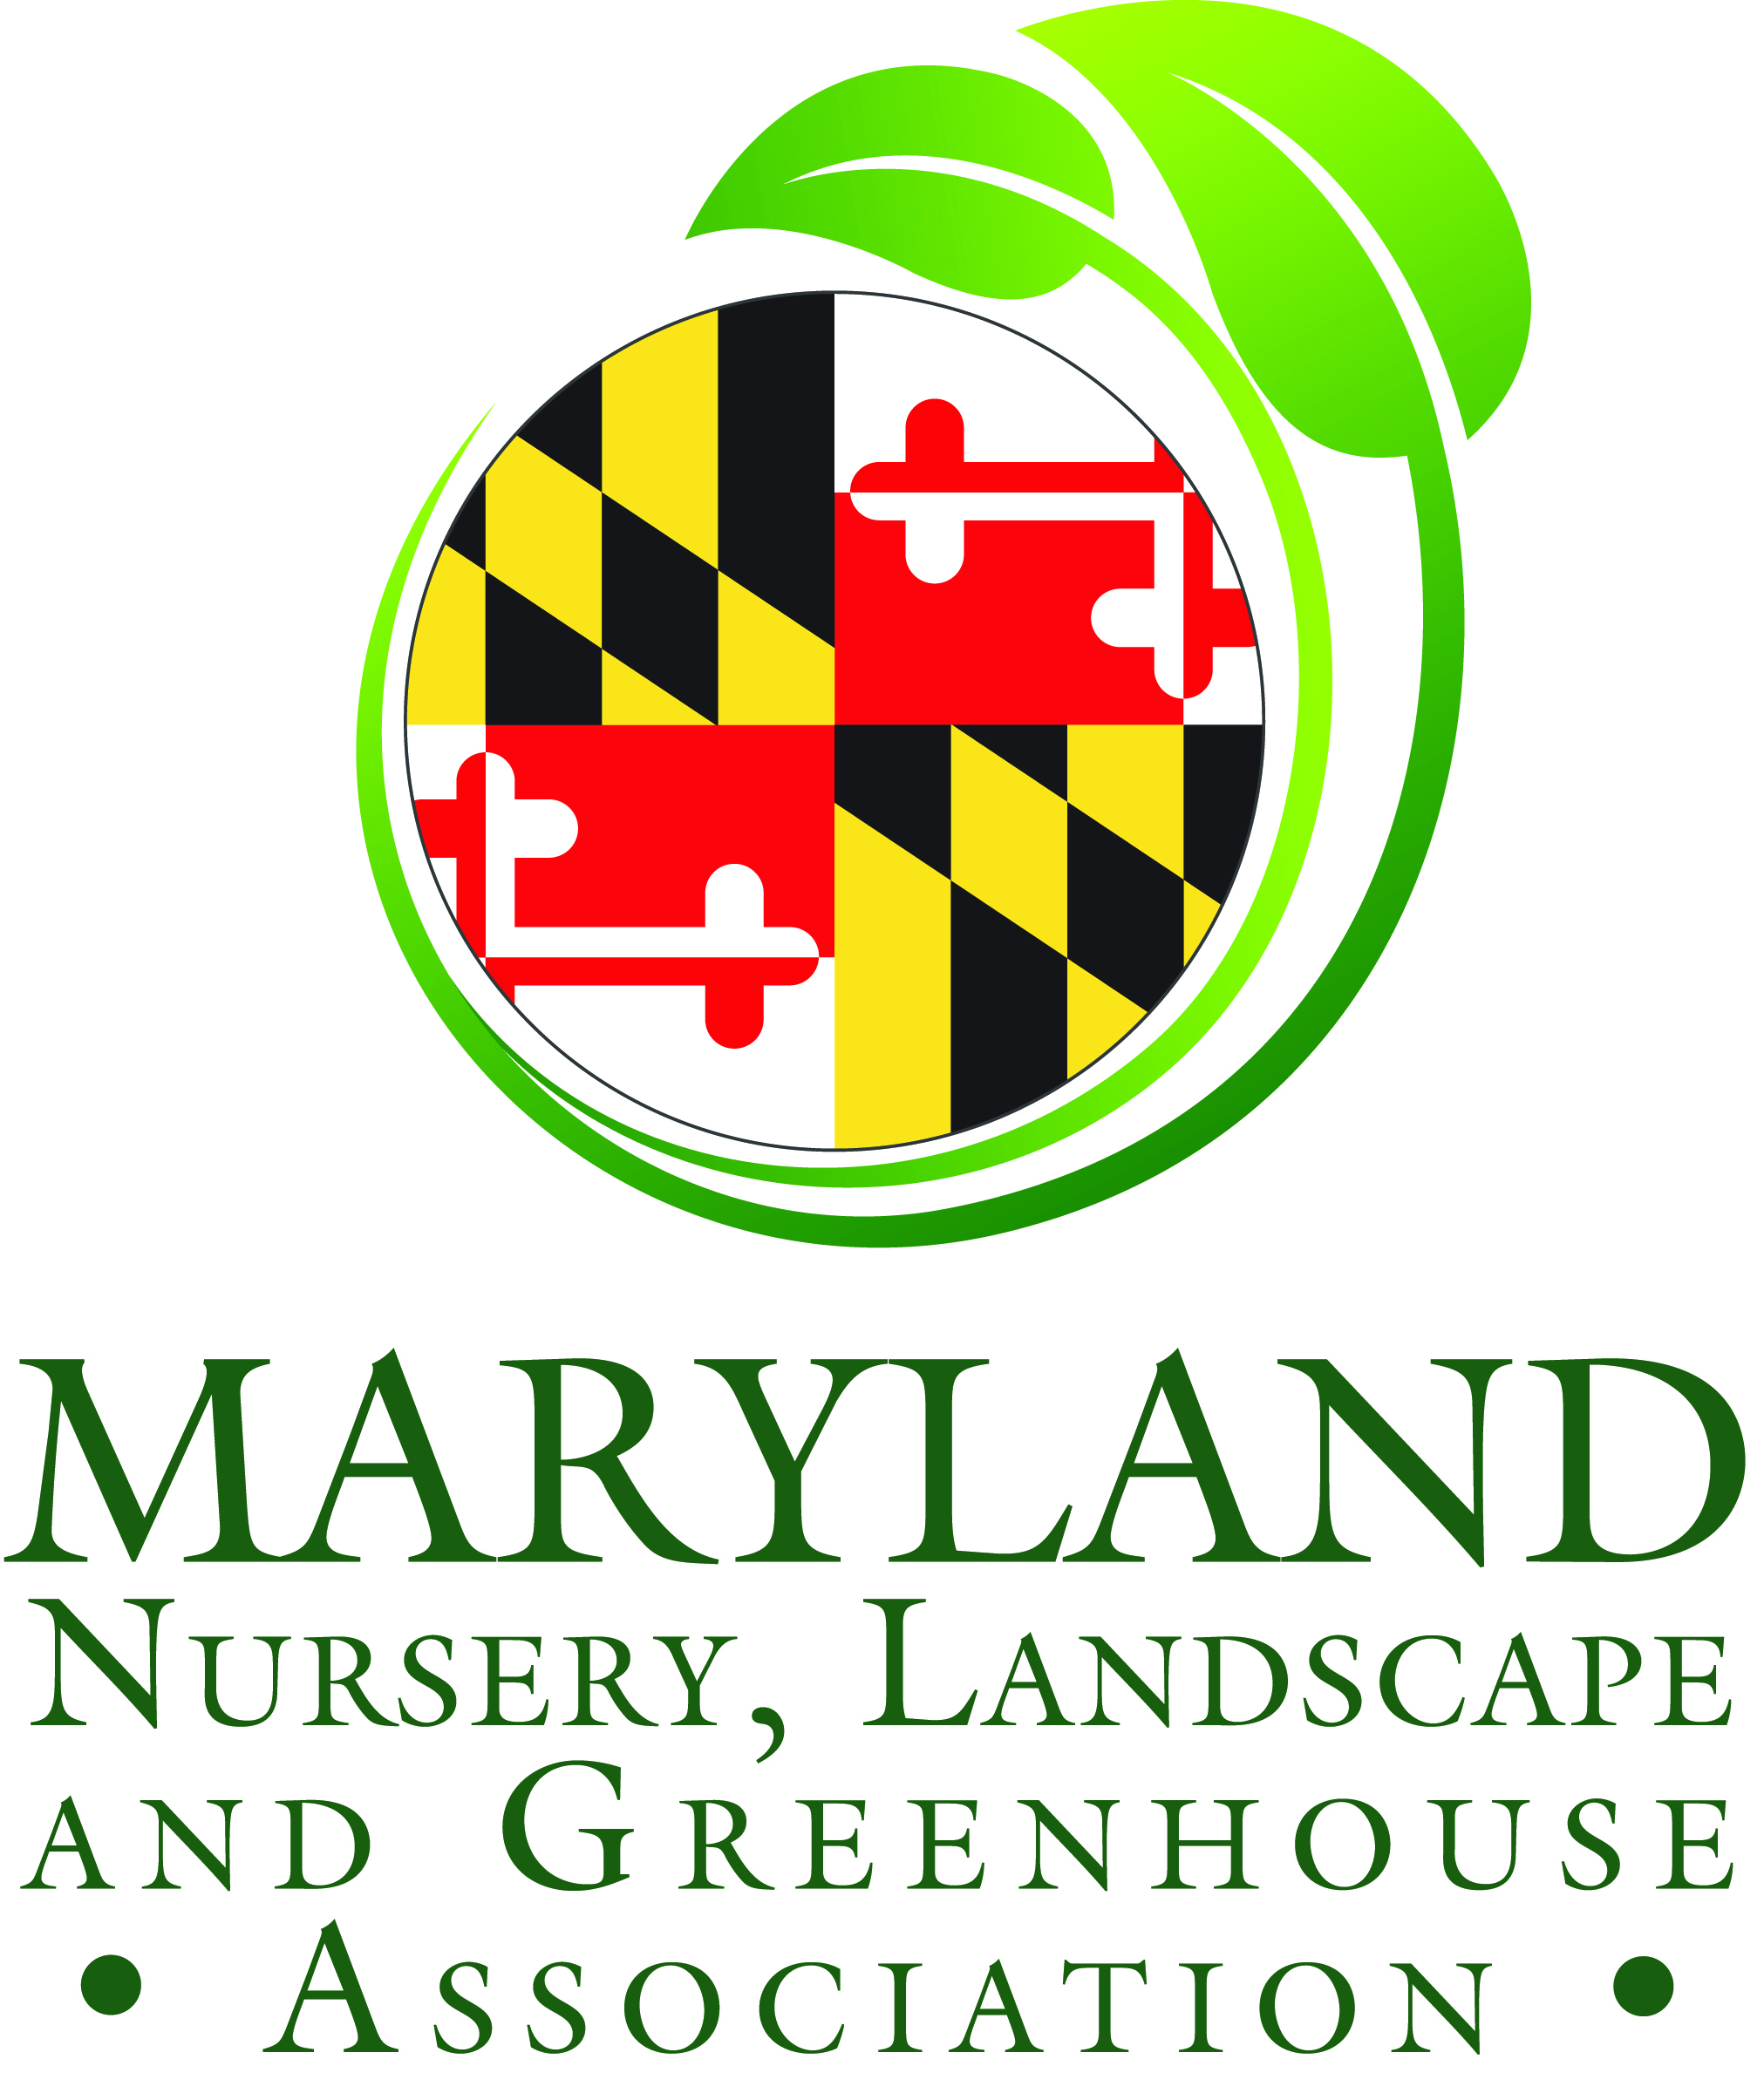 Maryland Nursery, Landscape and Greenhouse Association logo